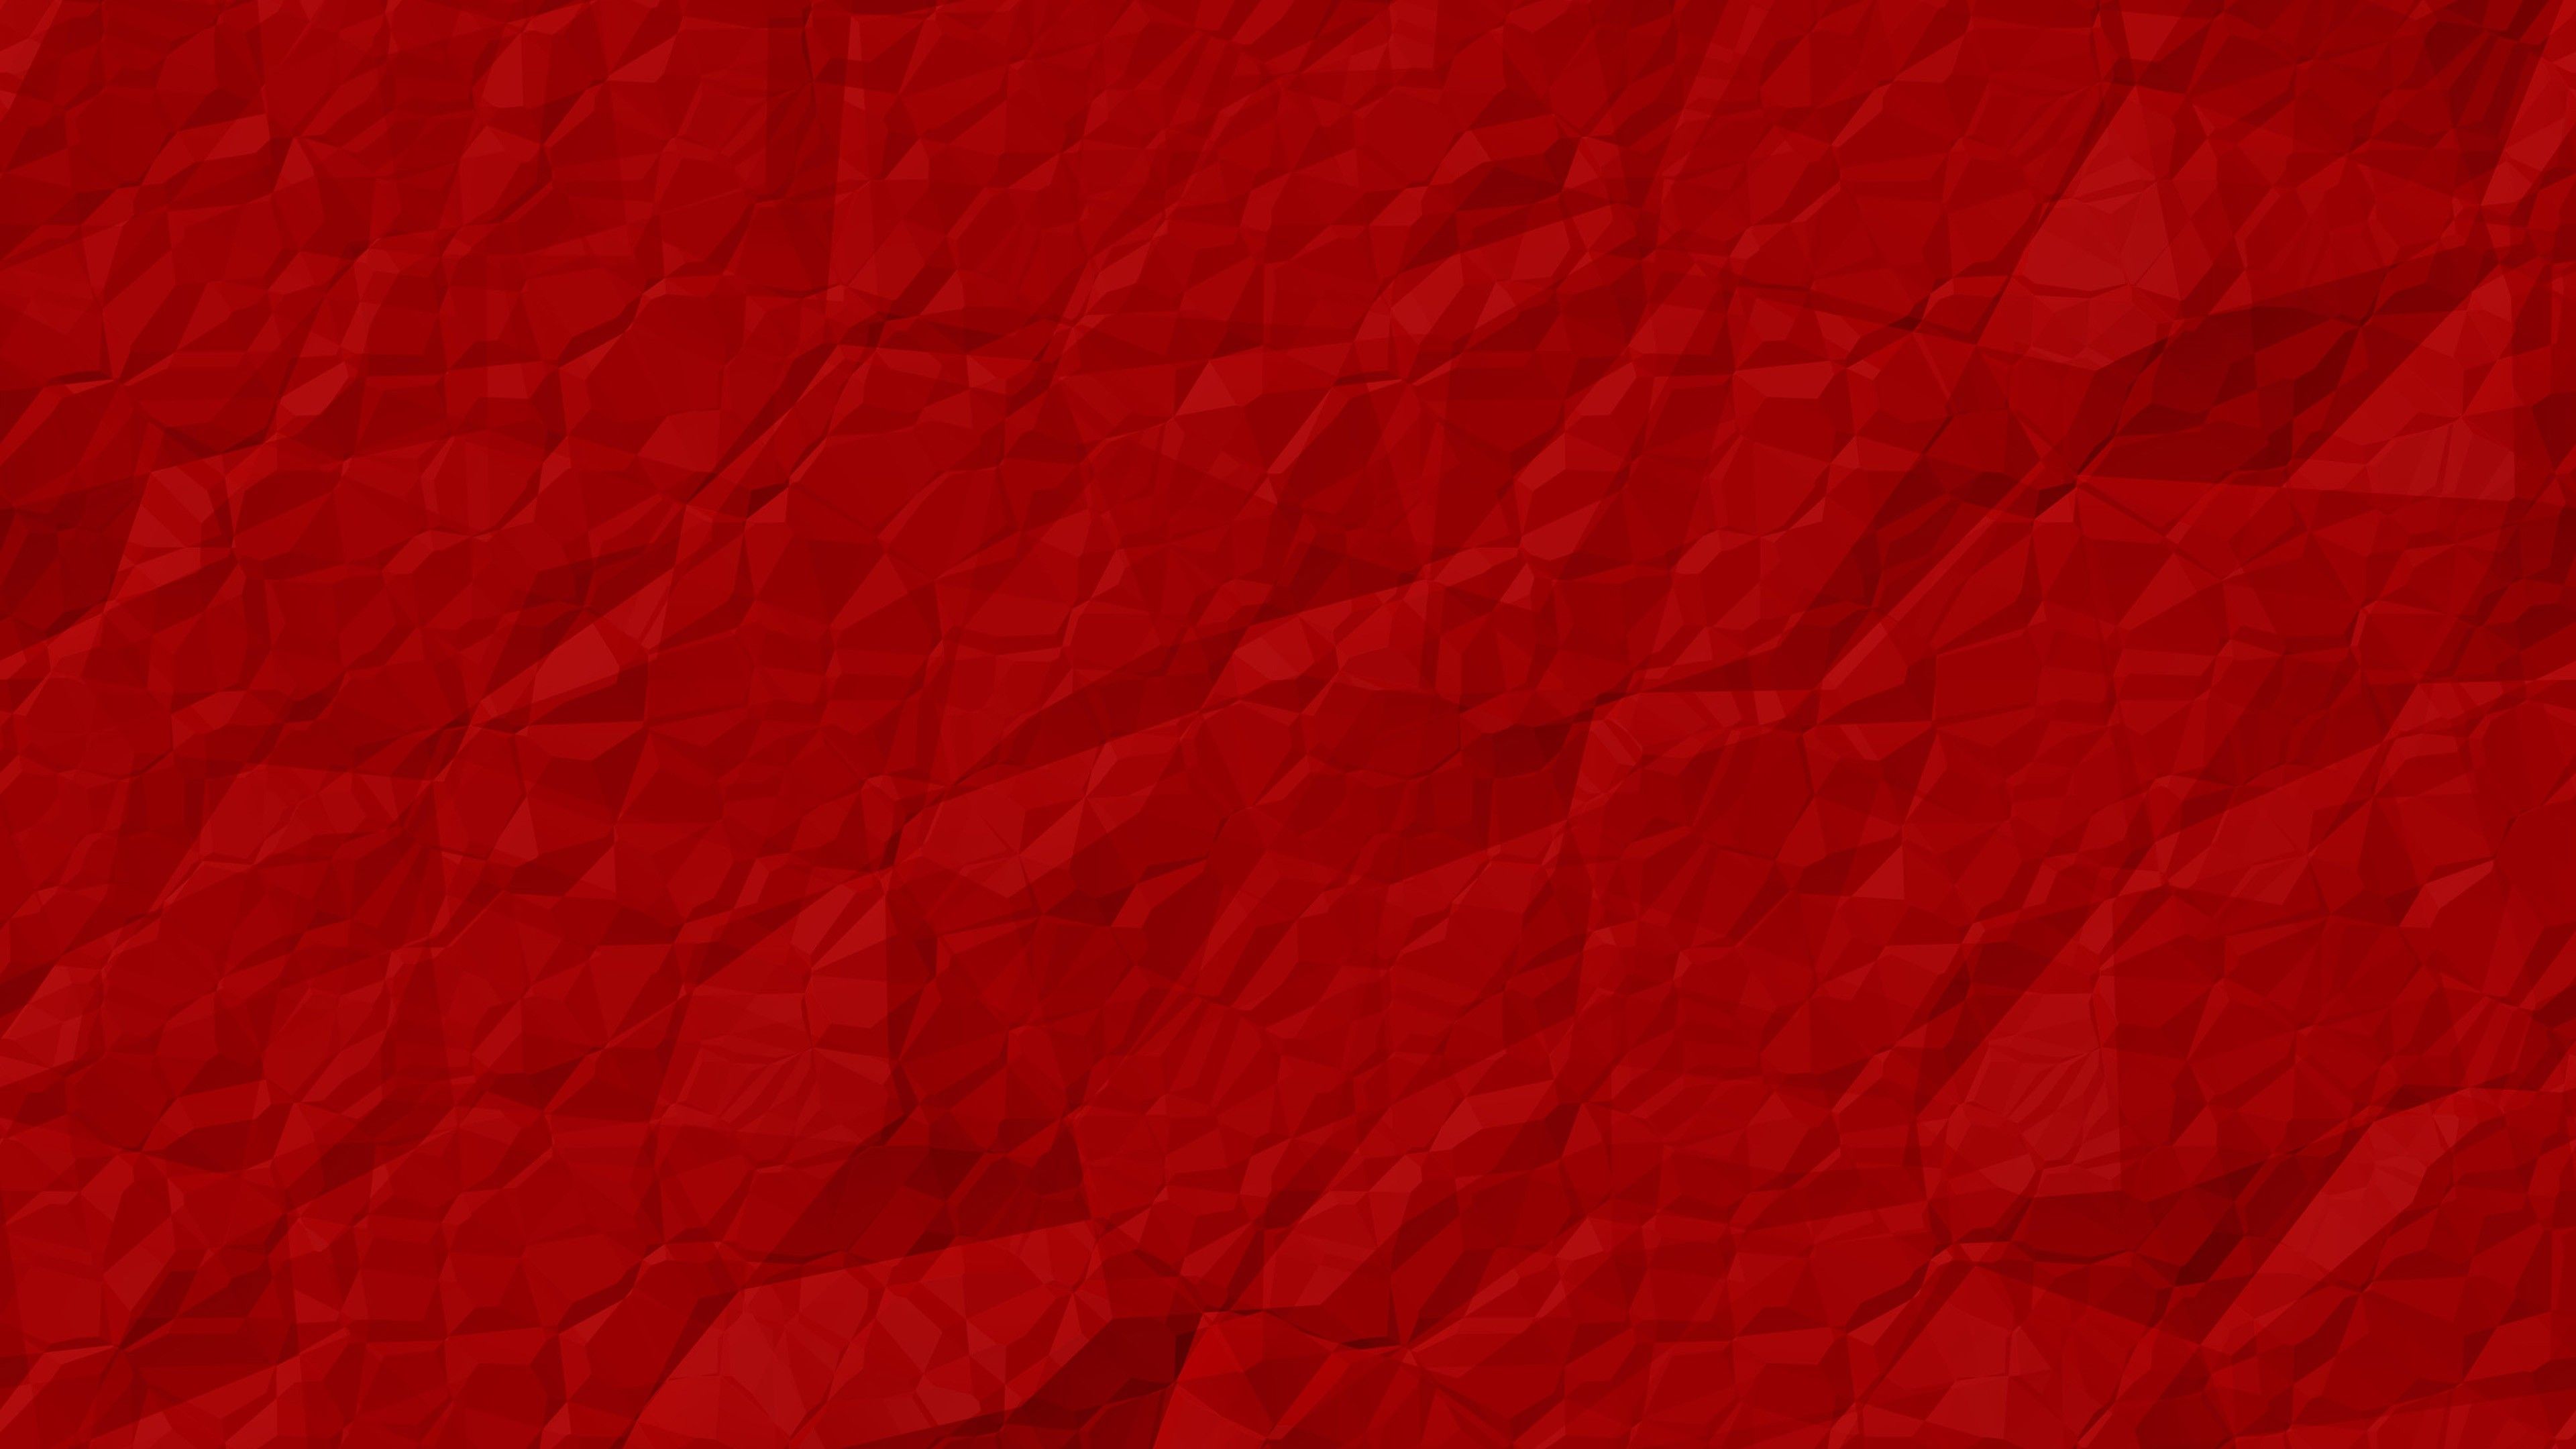 Red marble background wallpaper and .zastavki.com